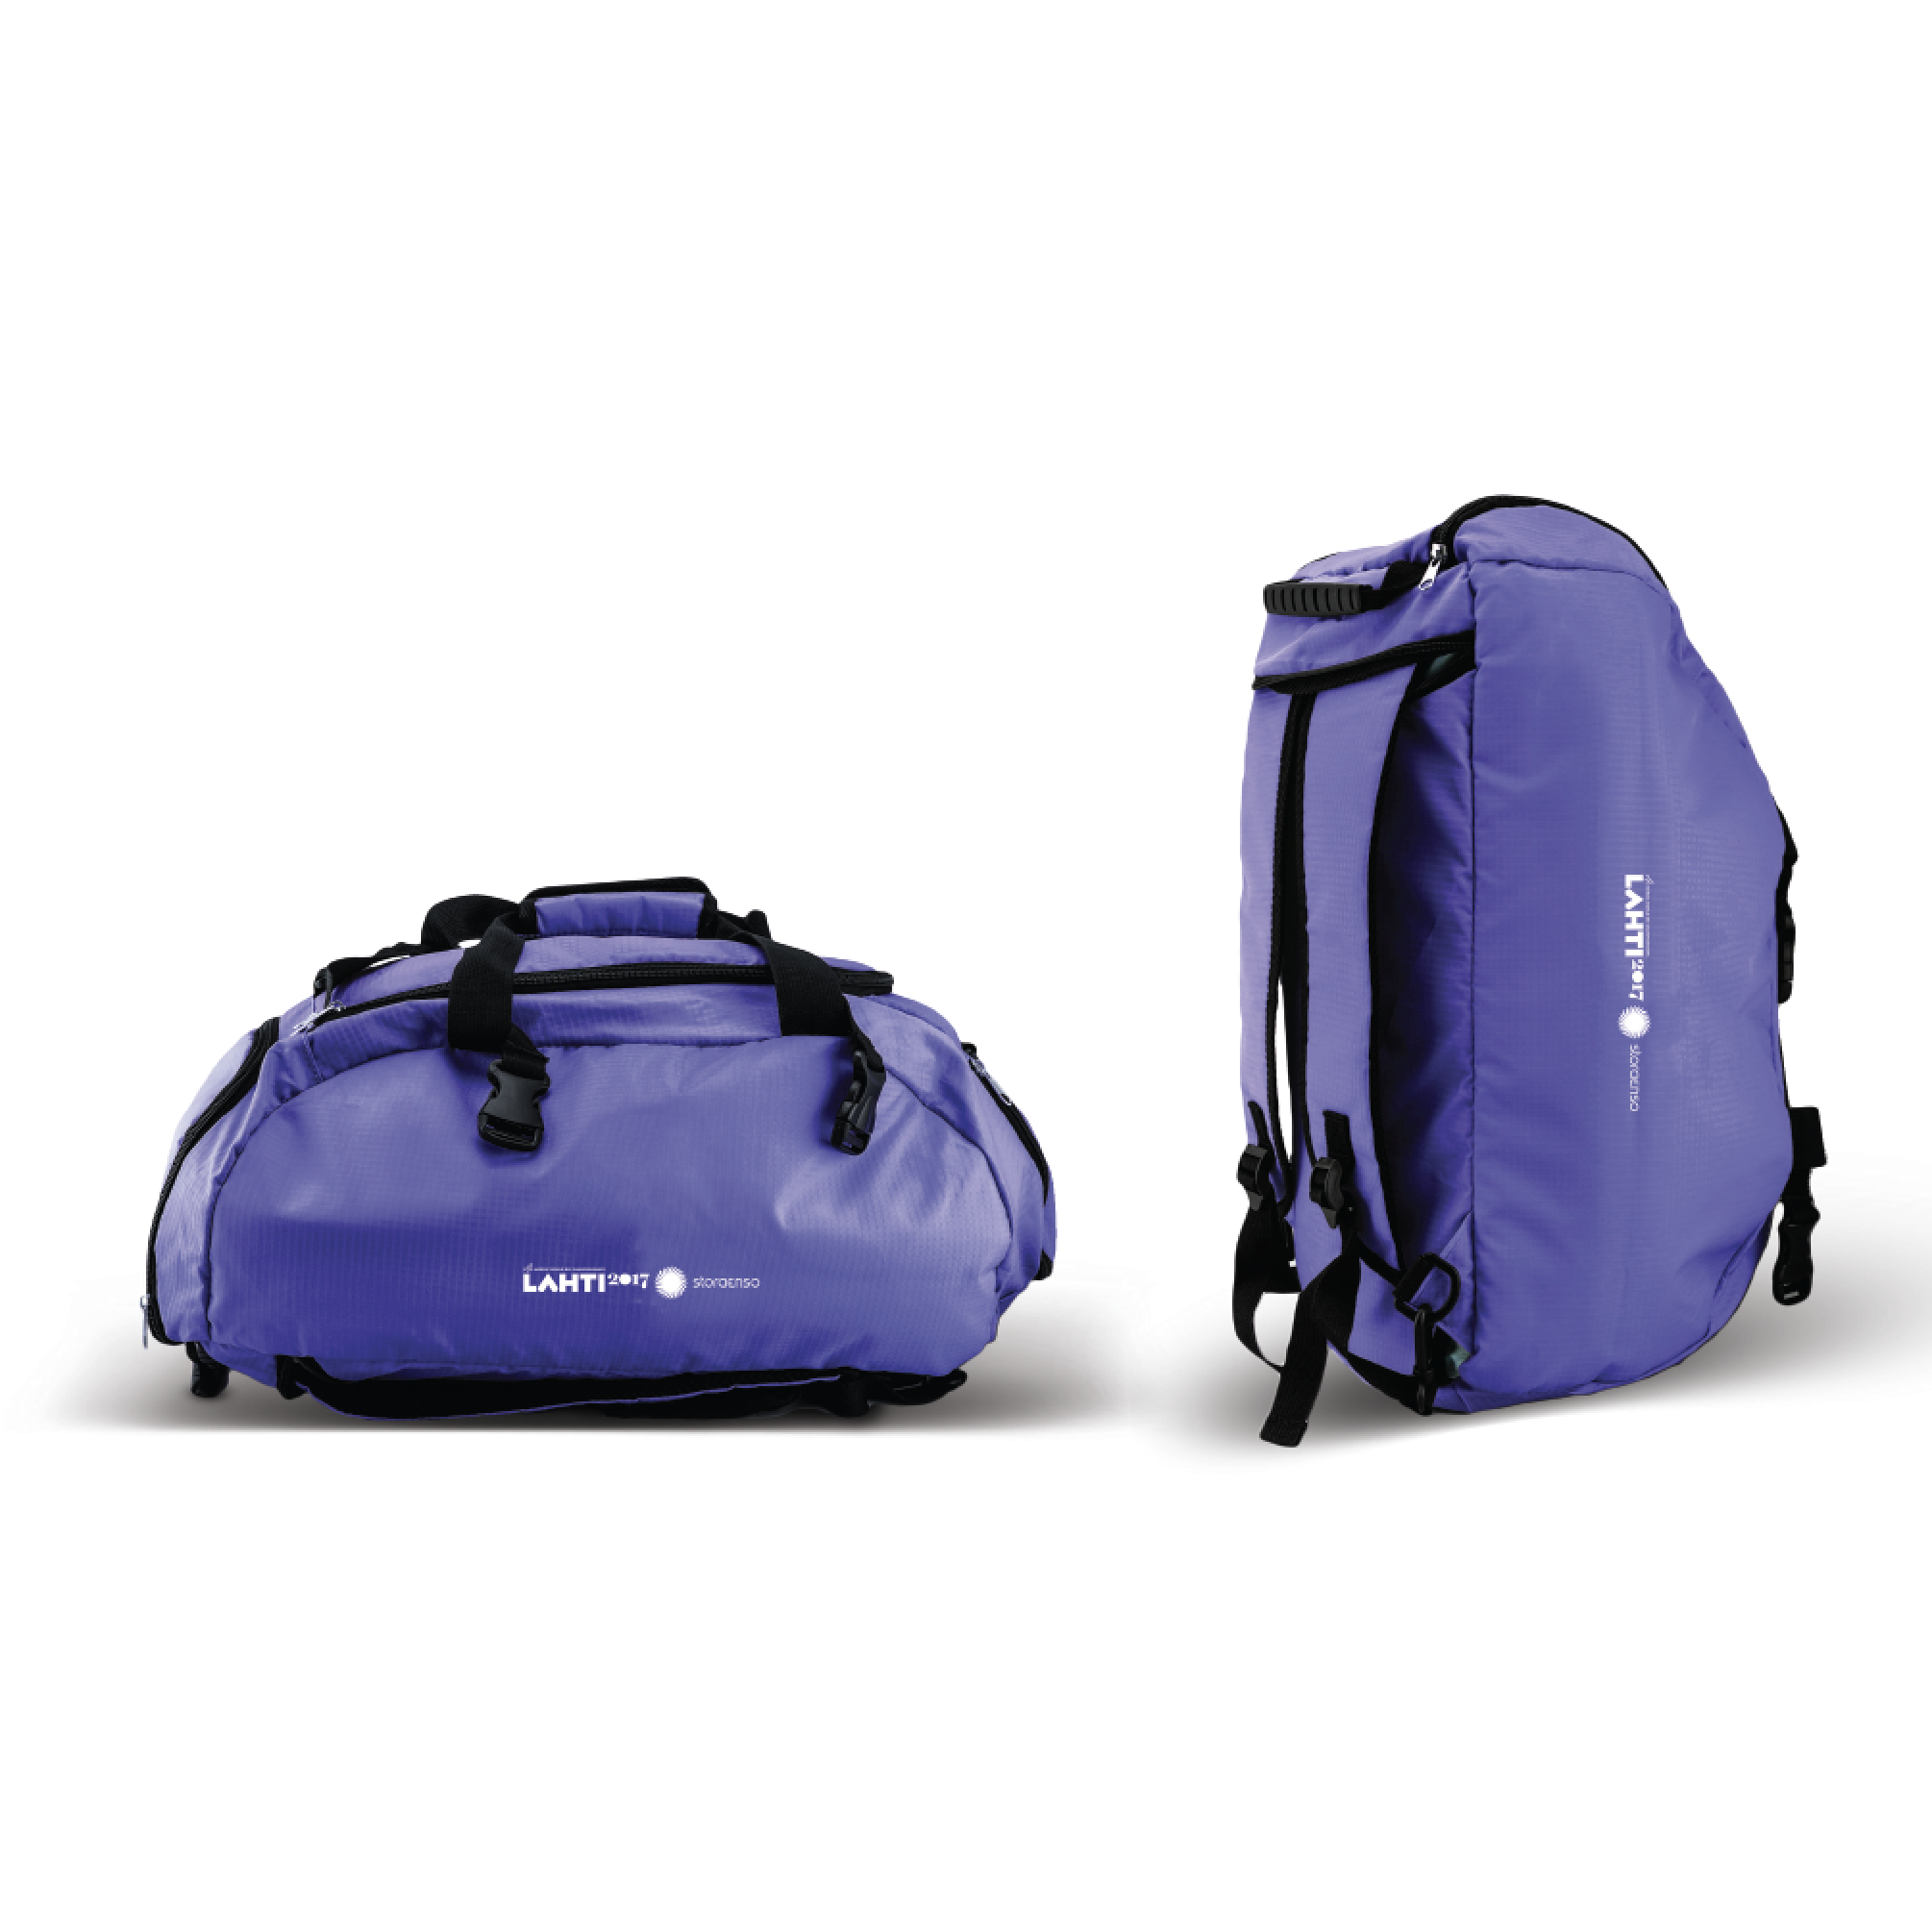 Multi-functional backpack travel bag